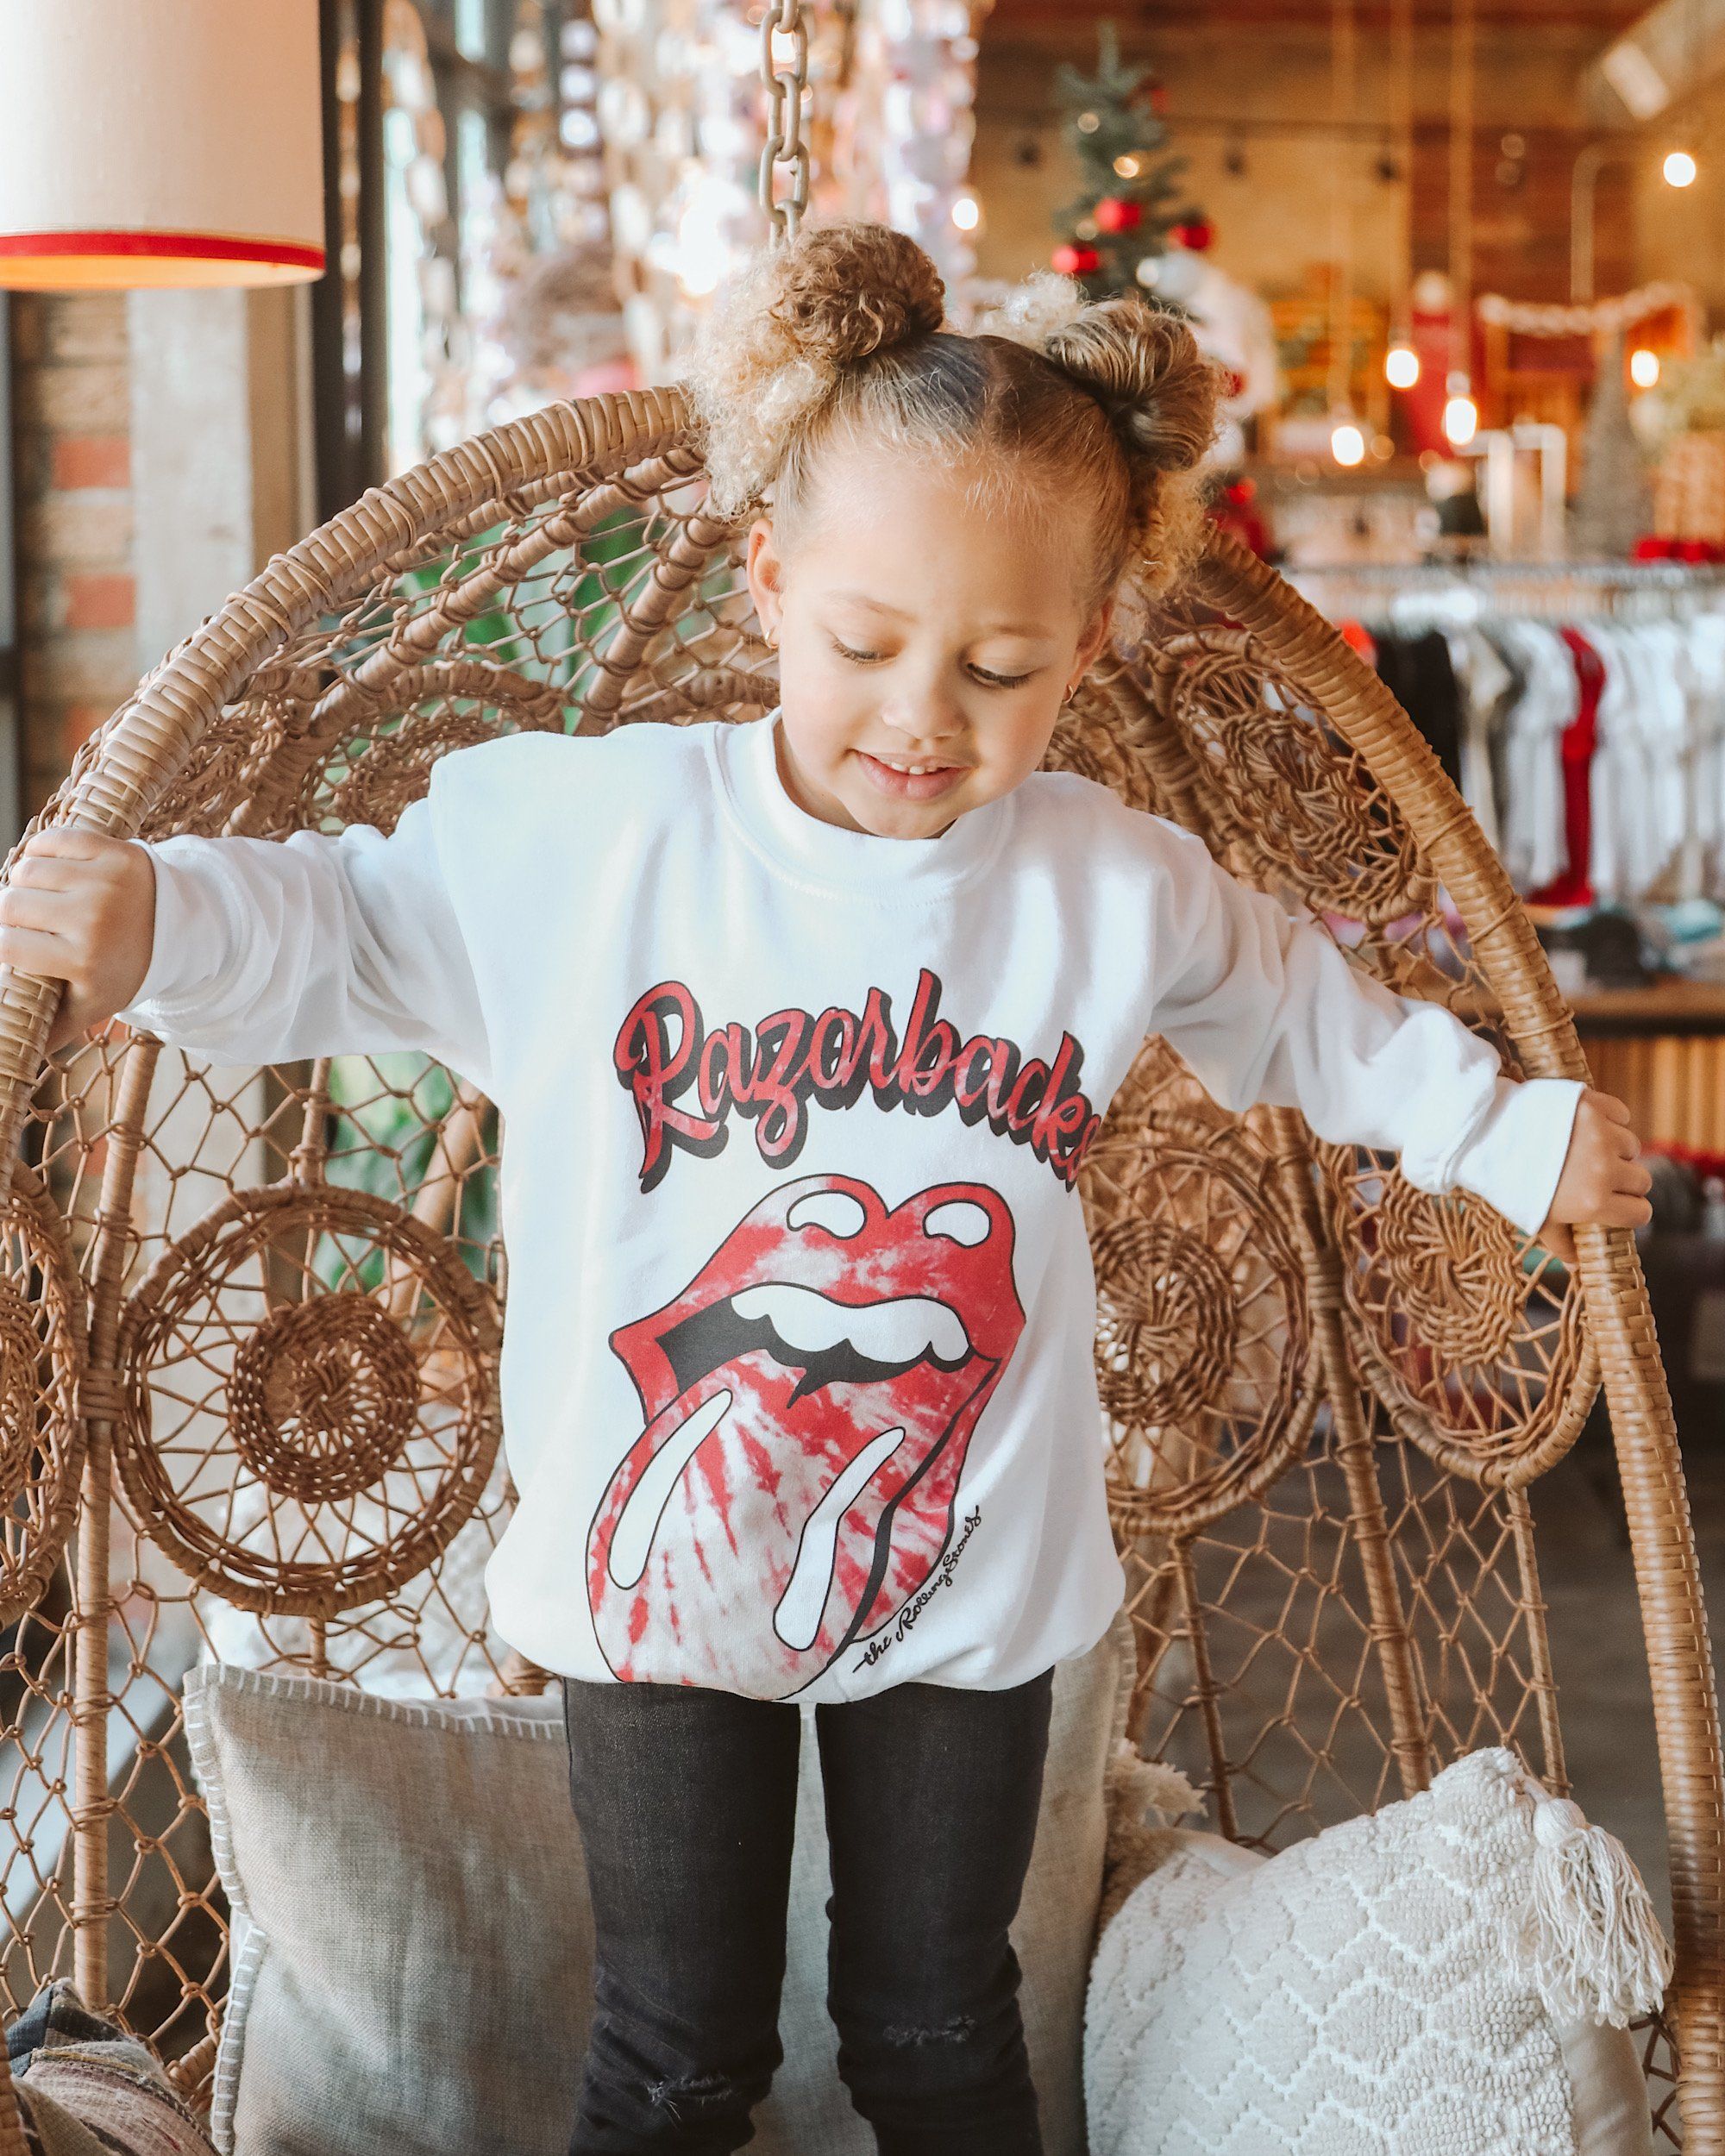 Children's Rolling Stones Razorbacks Tie Dye Lick White Sweatshirt - shoplivylu